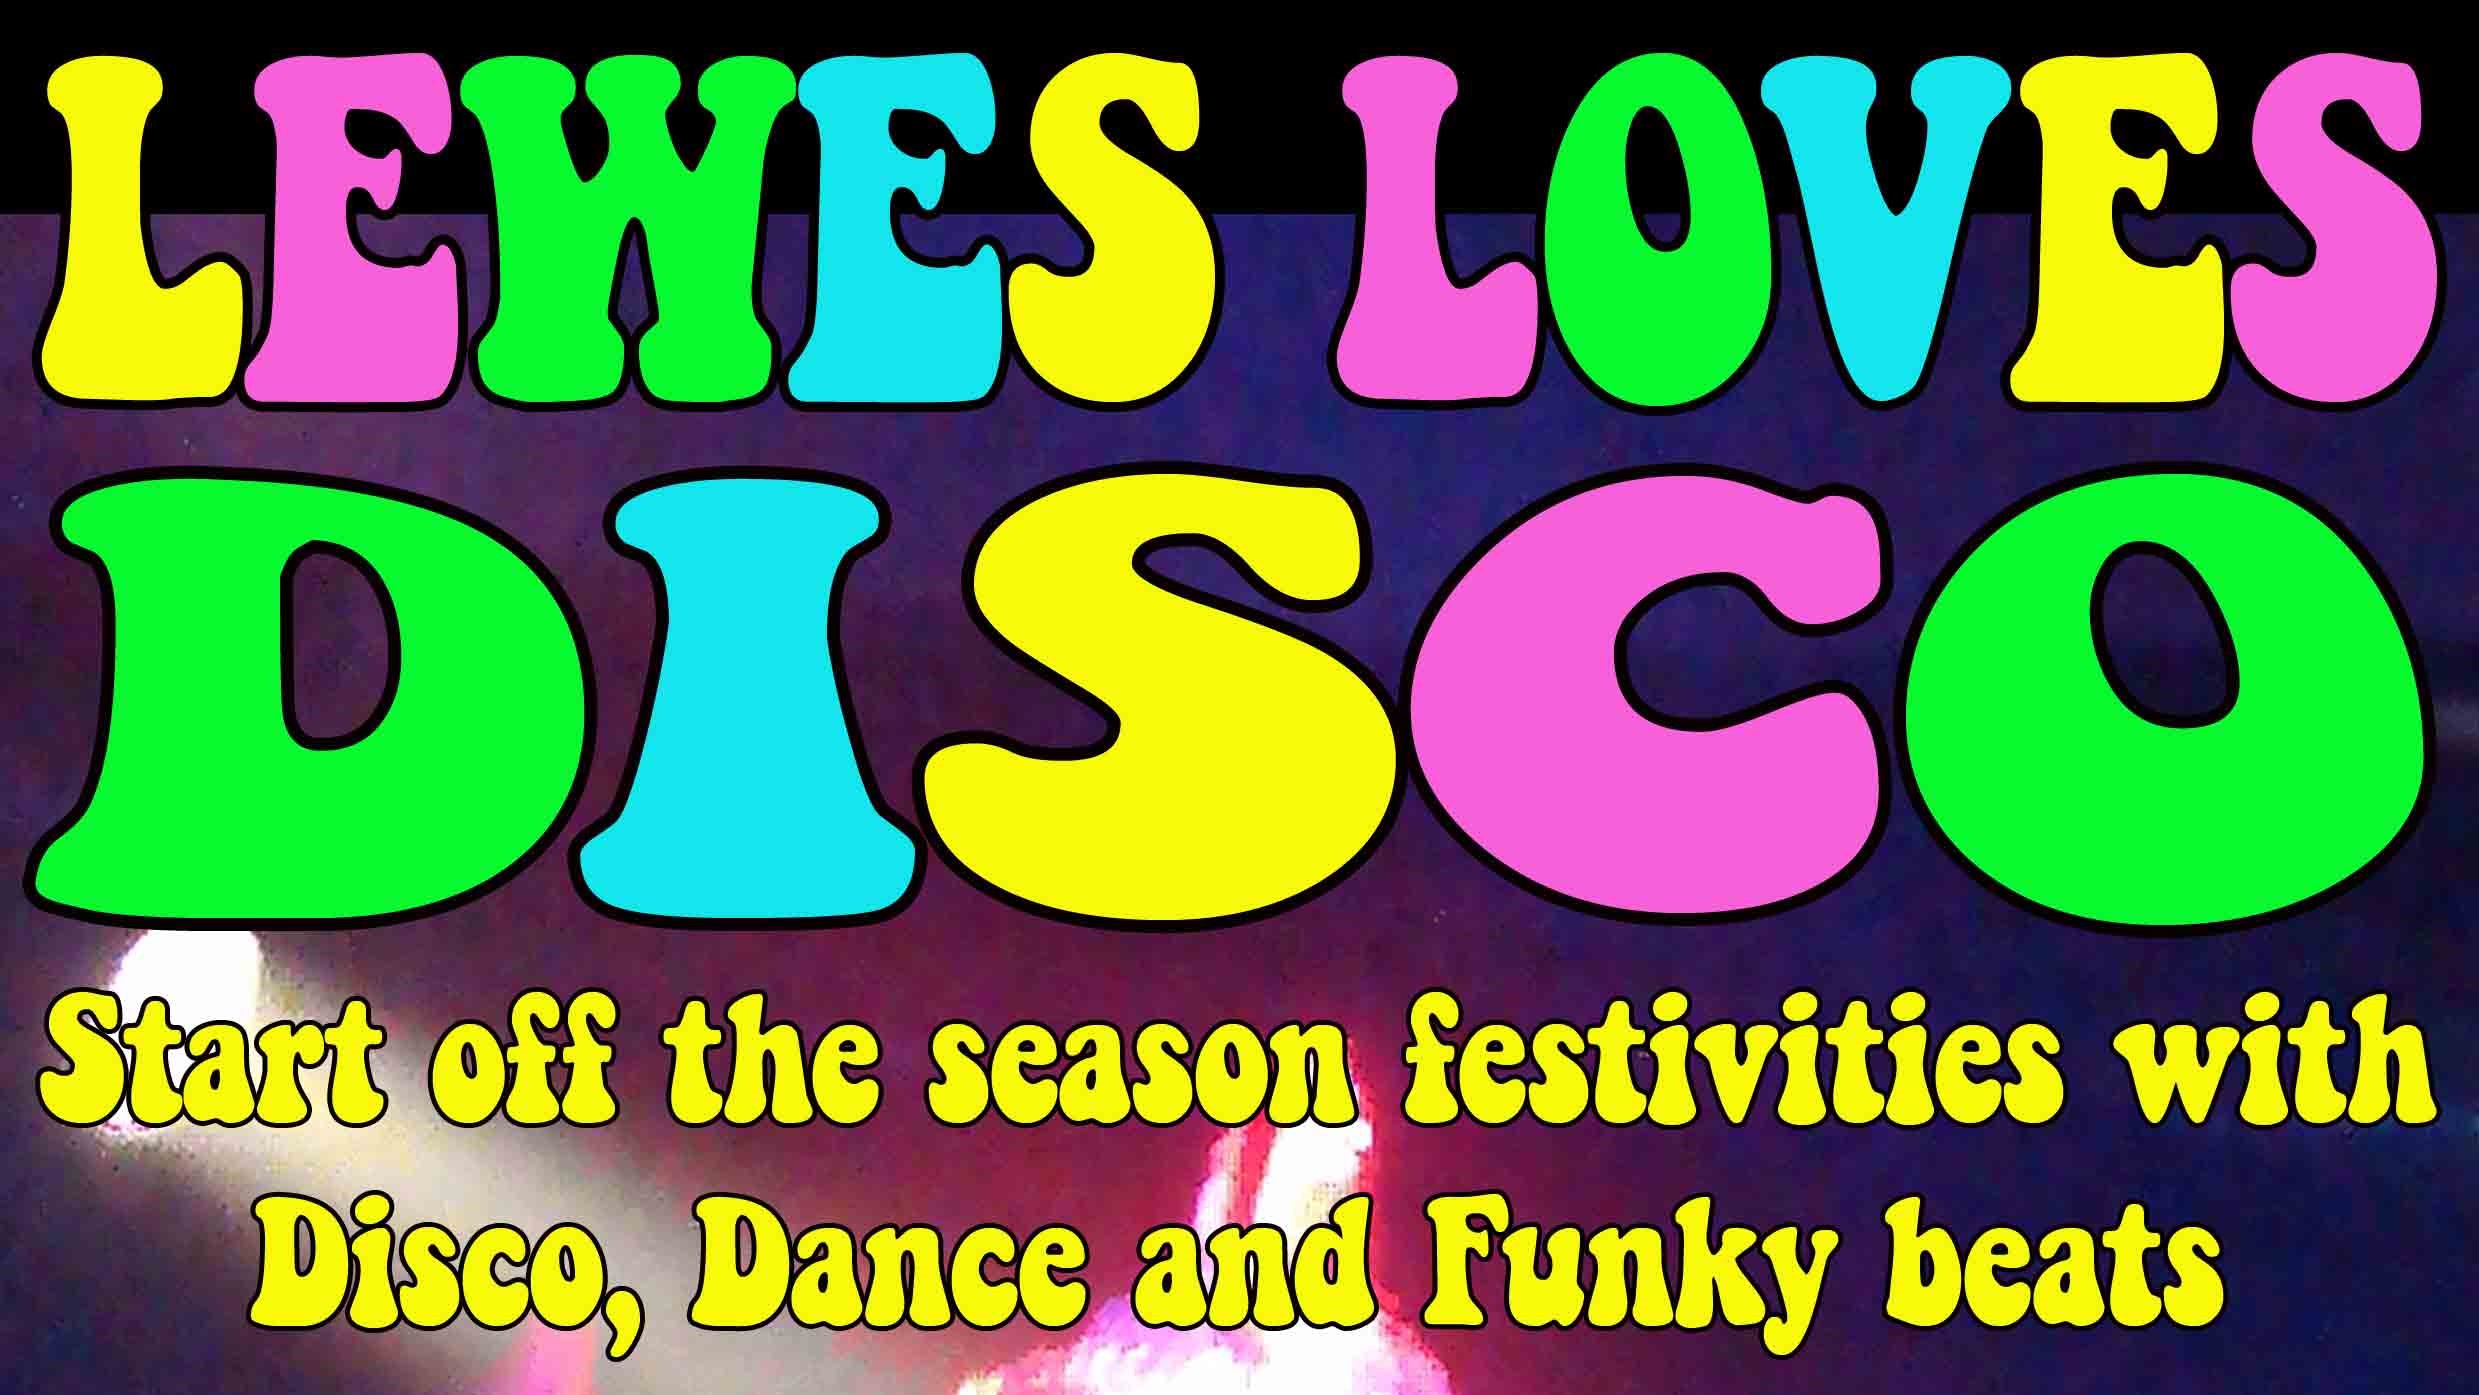 Lewes Loves Disco